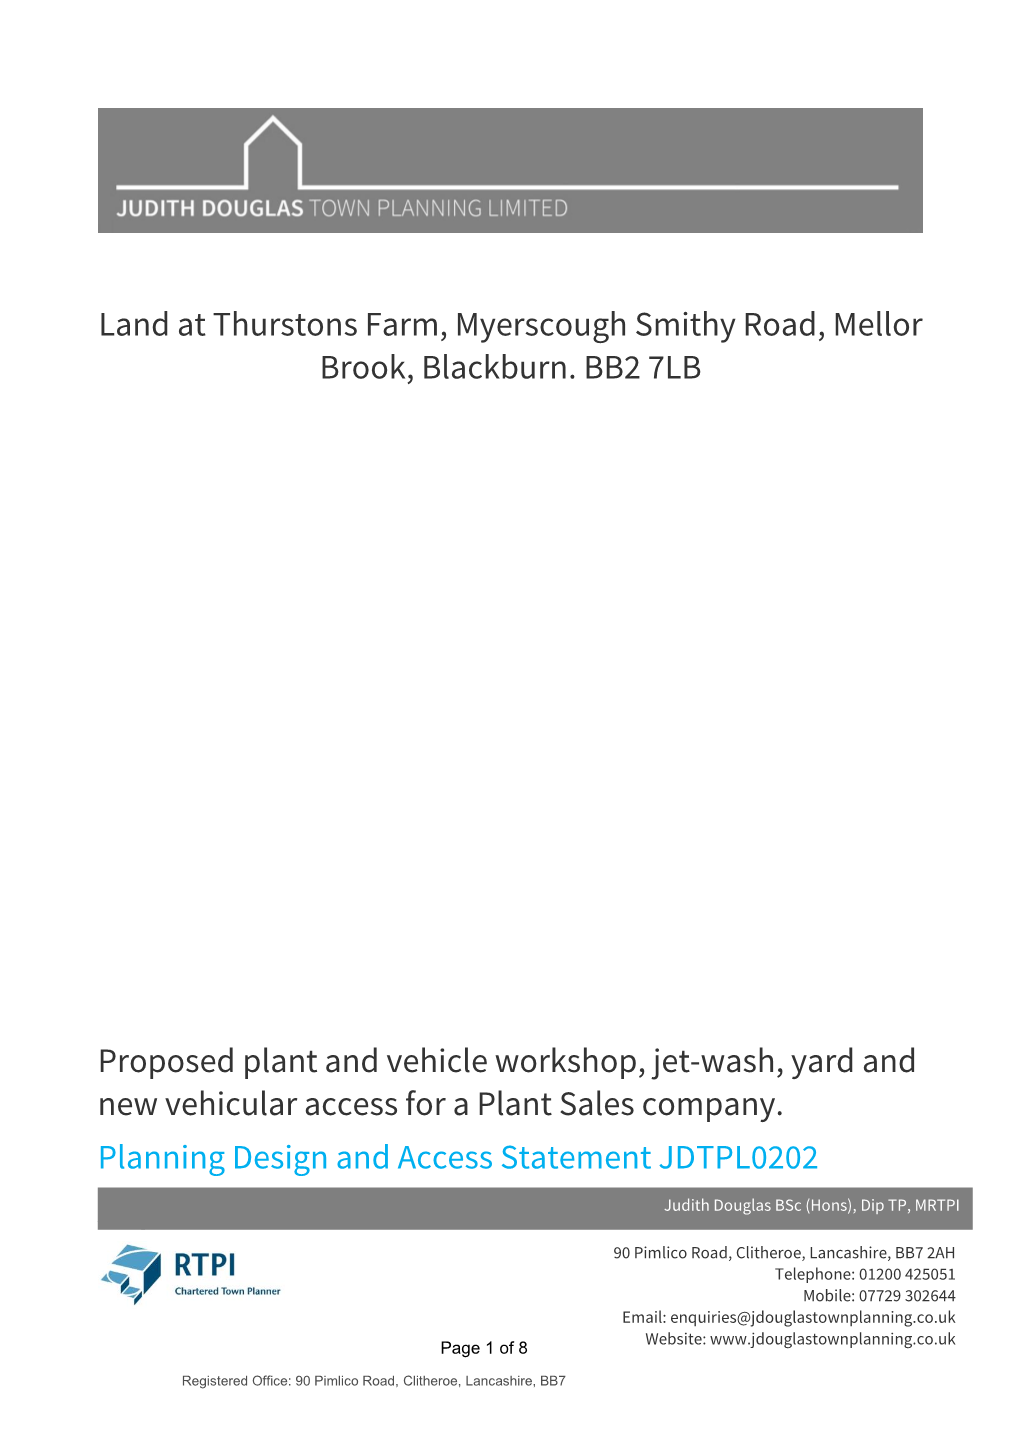 Land at Thurstons Farm, Myerscough Smithy Road, Mellor Brook, Blackburn